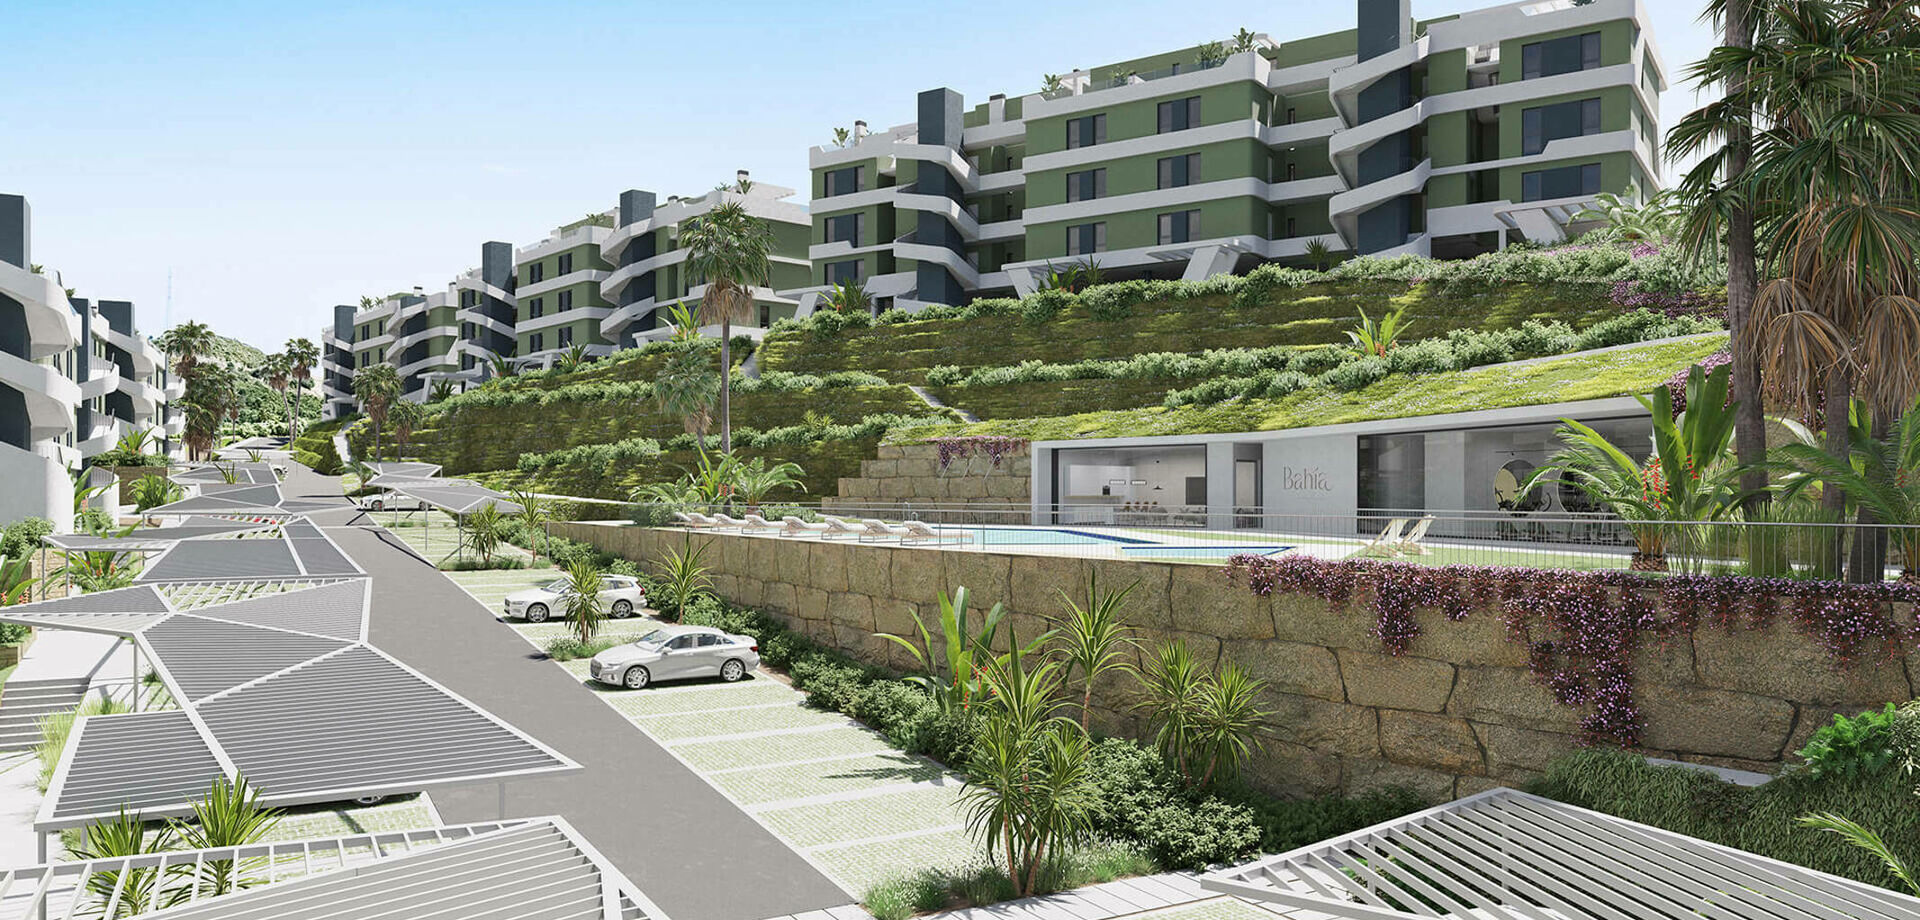 391 - Bahia - Modern Apartments in Mijas in 